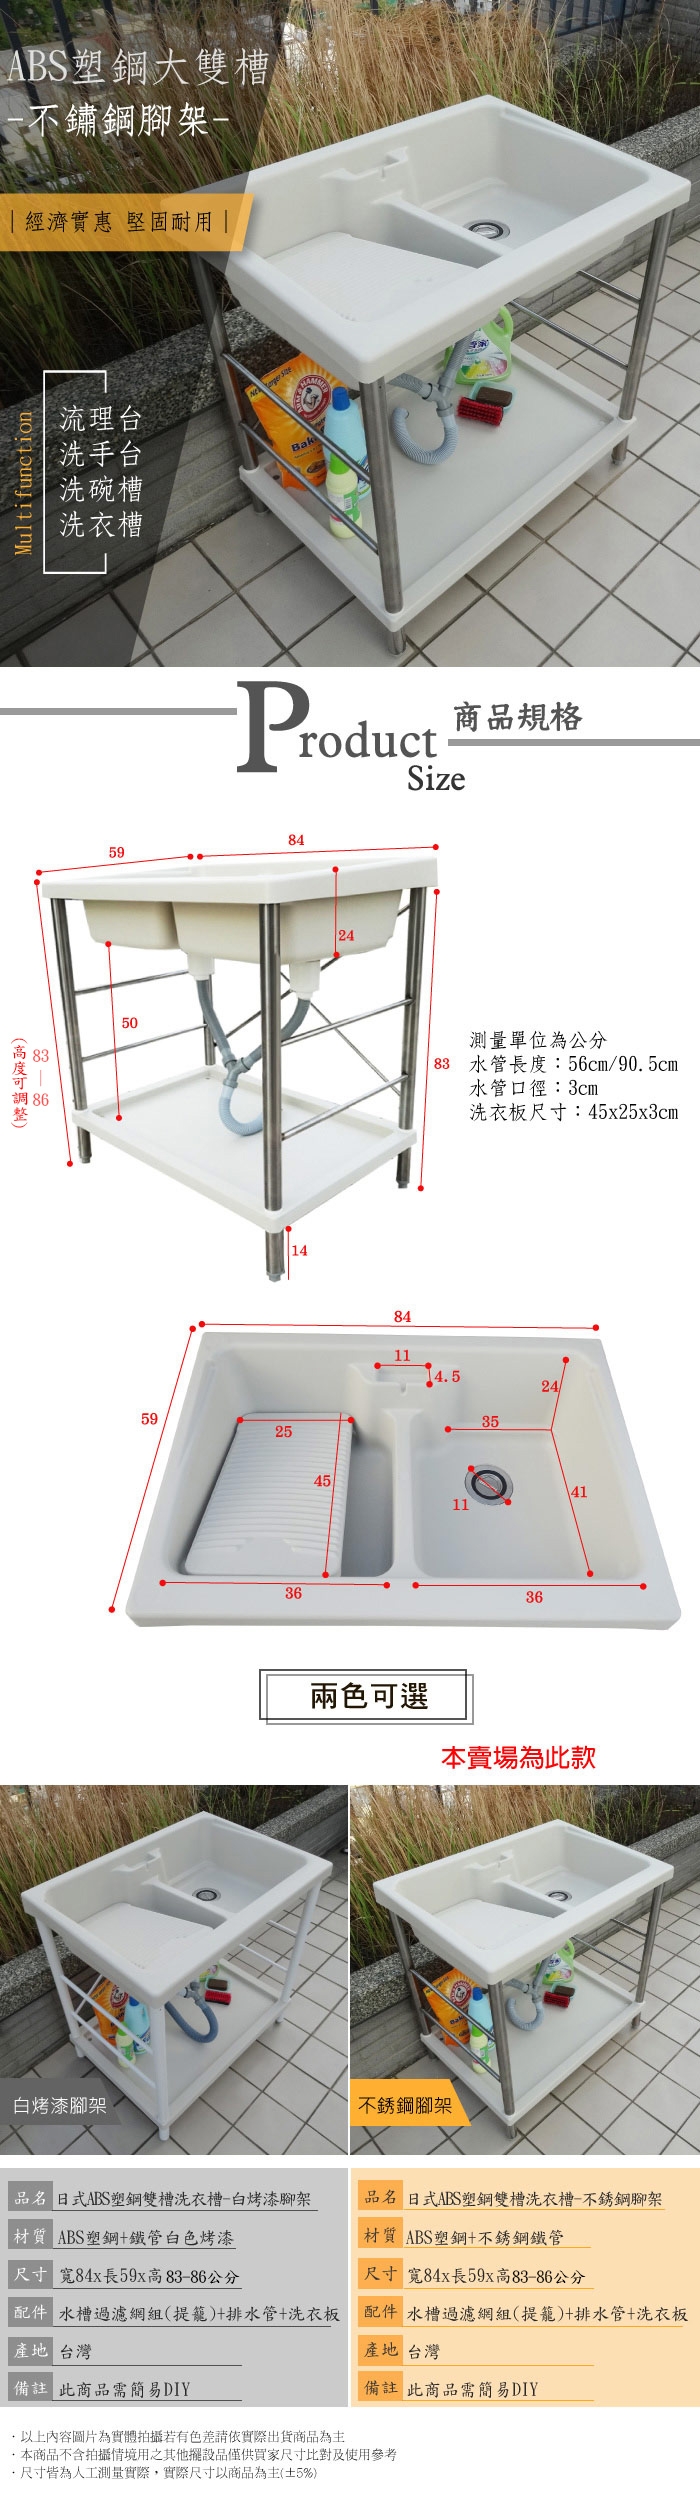 【Abis】雙11爆殺組~日式穩固耐用ABS雙槽式不鏽鋼腳洗衣槽1組 +小型洗衣槽1組